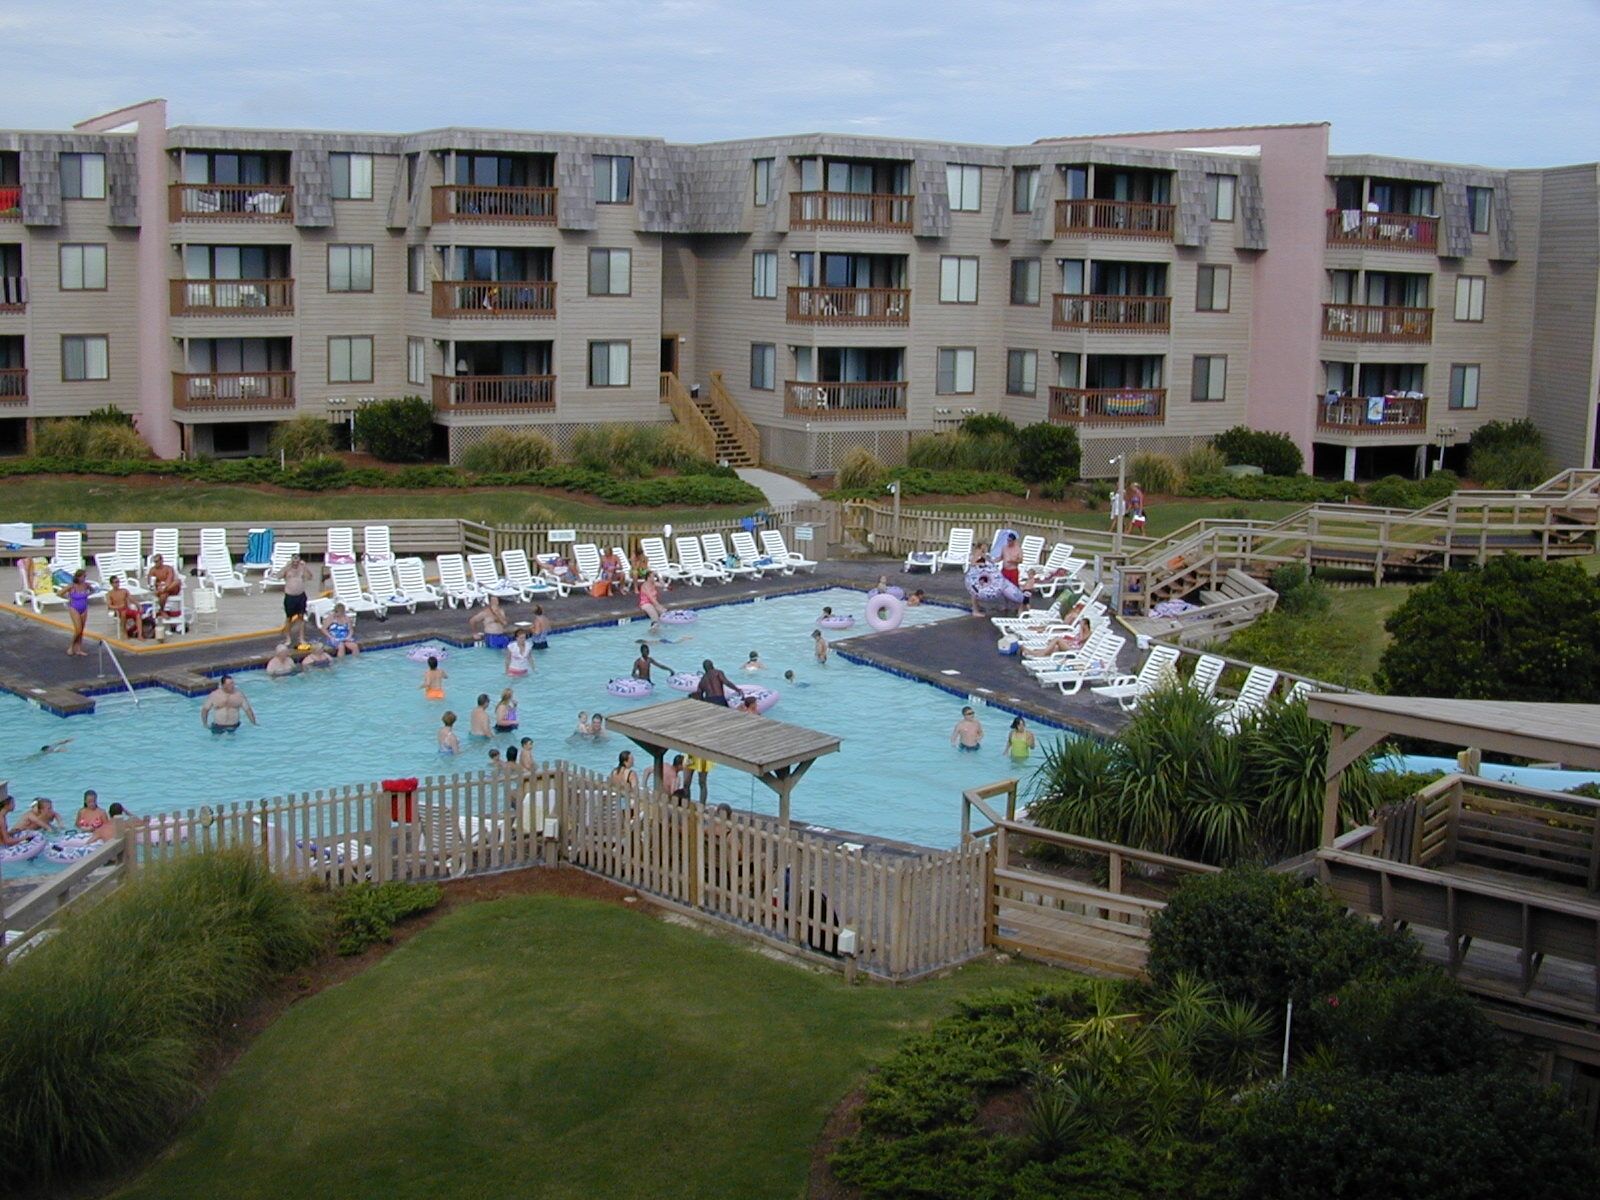 Beach place resort atlantic vri nc hotels rates pool